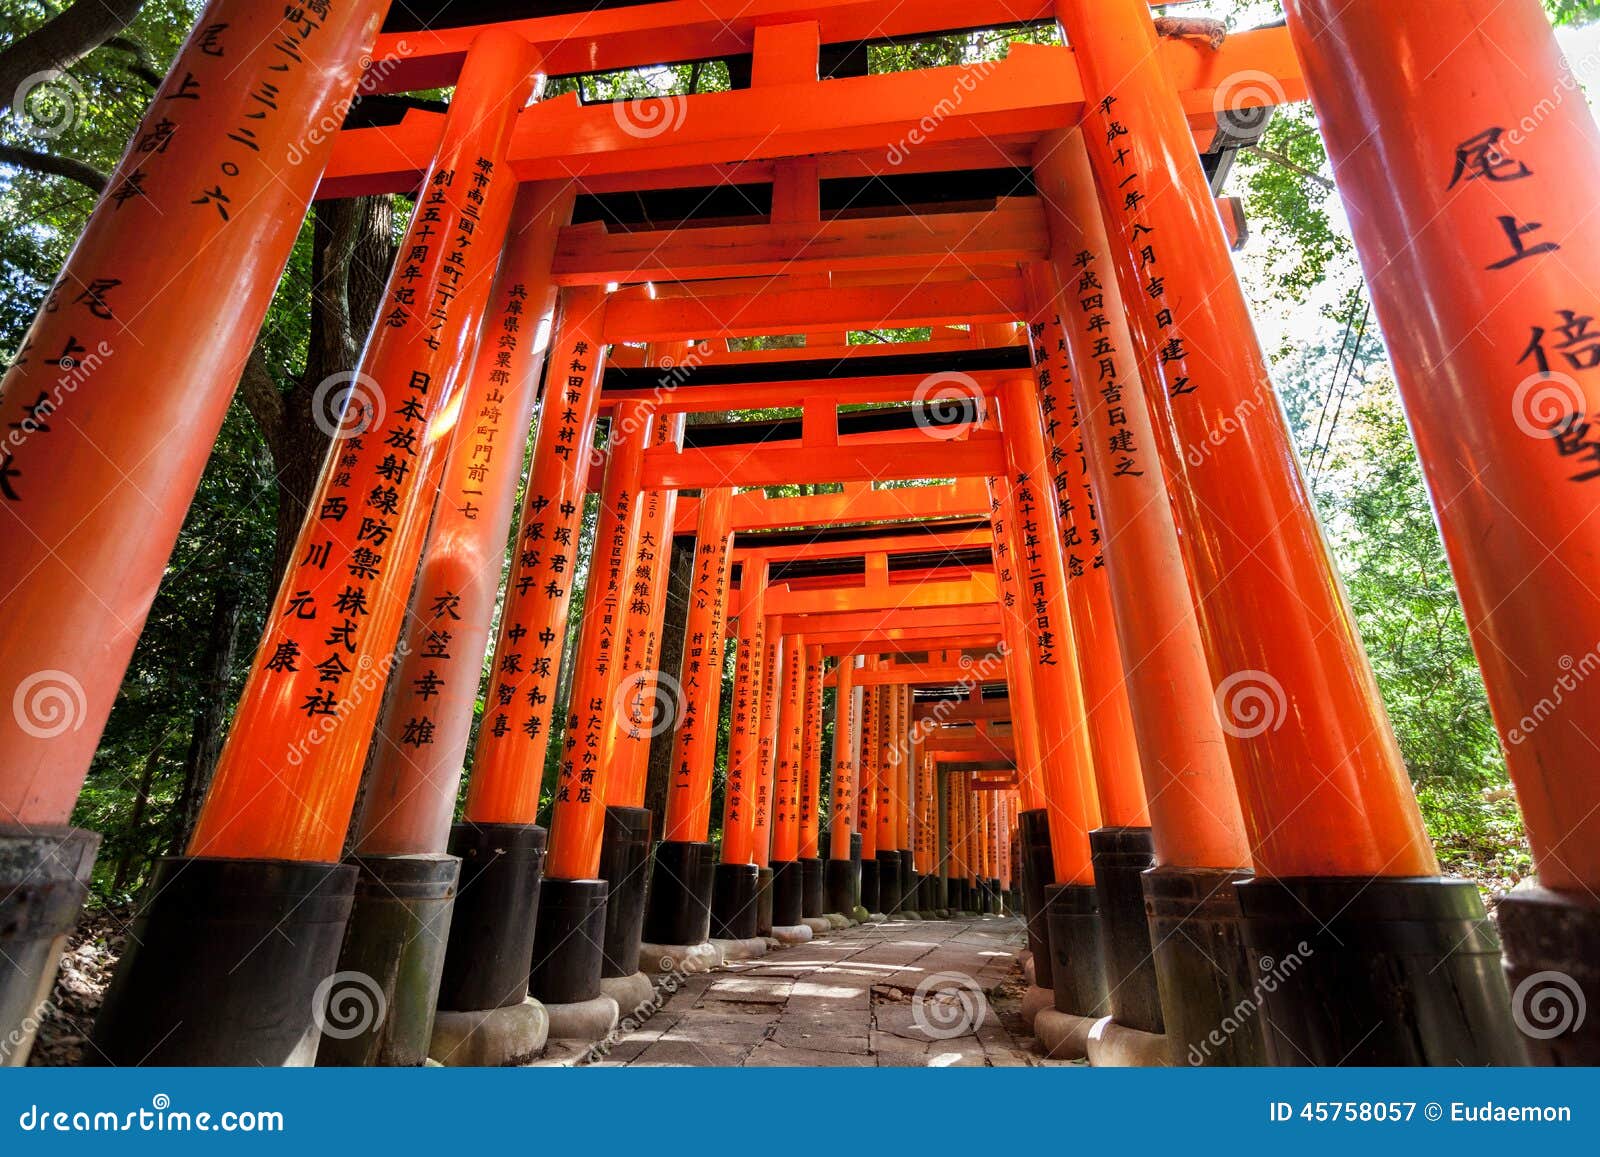 torii gates at fushimi inari shrine in kyoto, japan